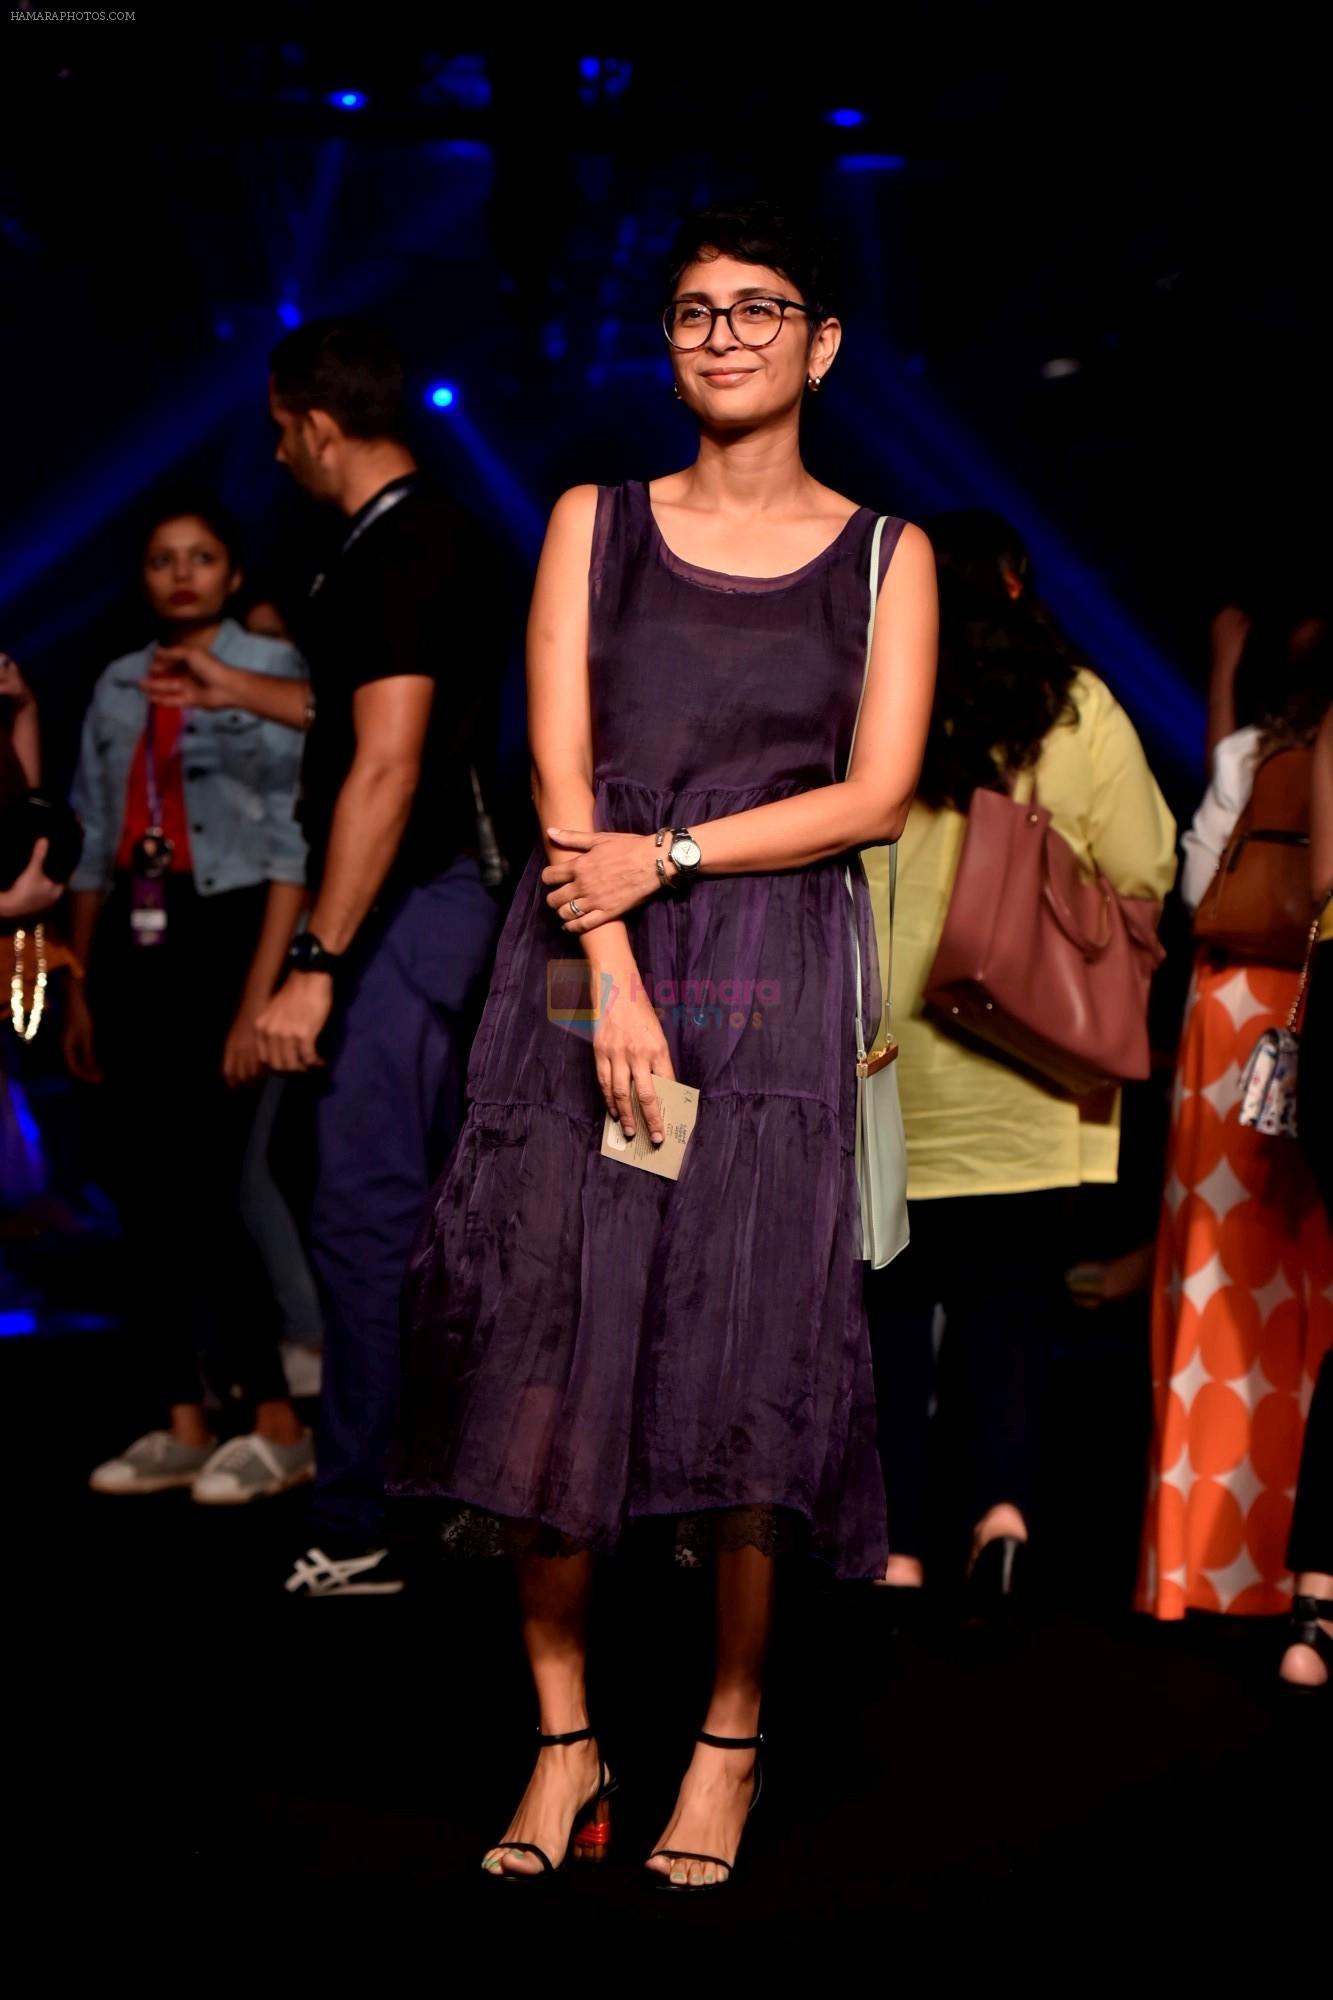 Kiran Rao at Lakme Fashion Week STUDIO on 27th Aug 2018